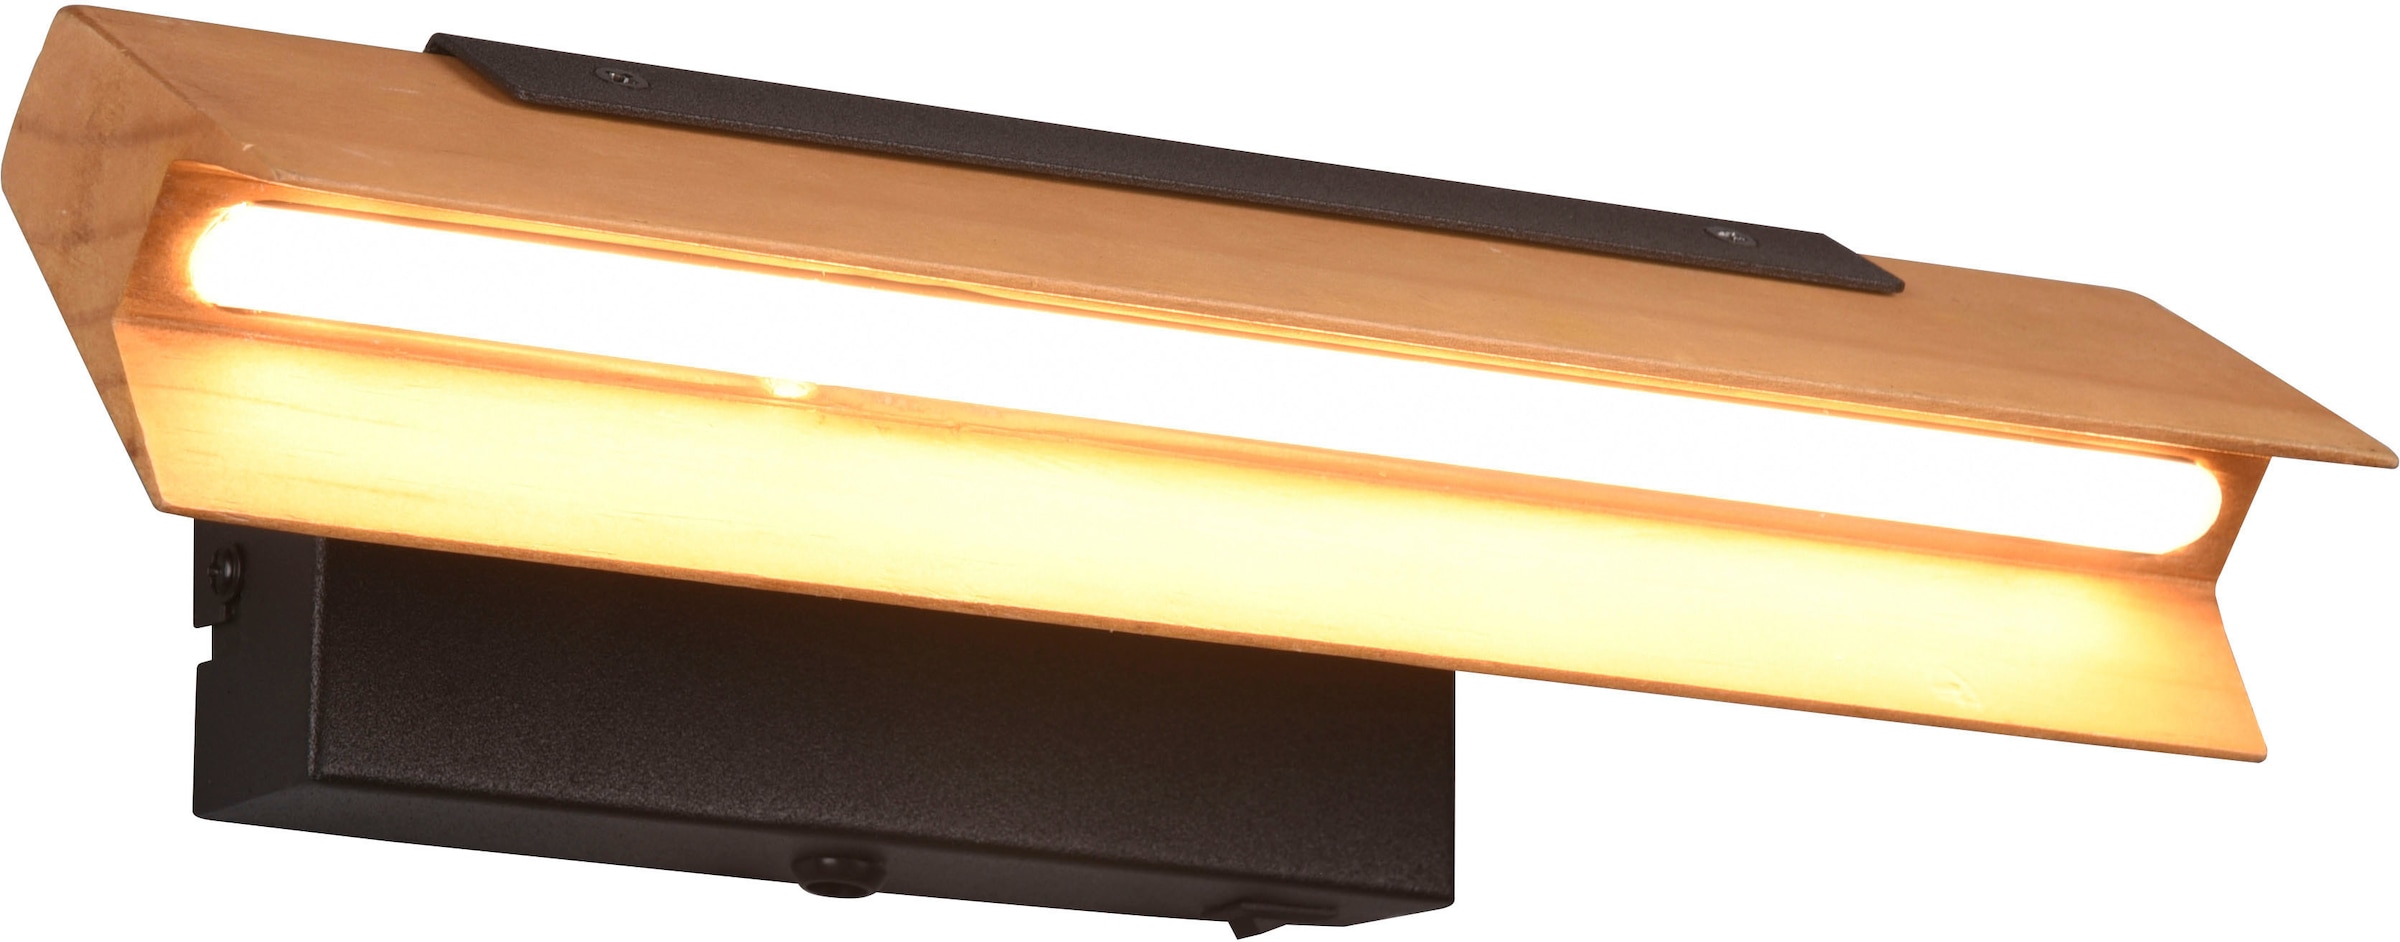 TRIO Leuchten LED schwenkbar, »Kerala«, bei OTTO bestellen warmweiß, Wandlampe 1 LED Dimmstufen Wandleuchte Holzschirm 1100 flammig-flammig, Lumen 3